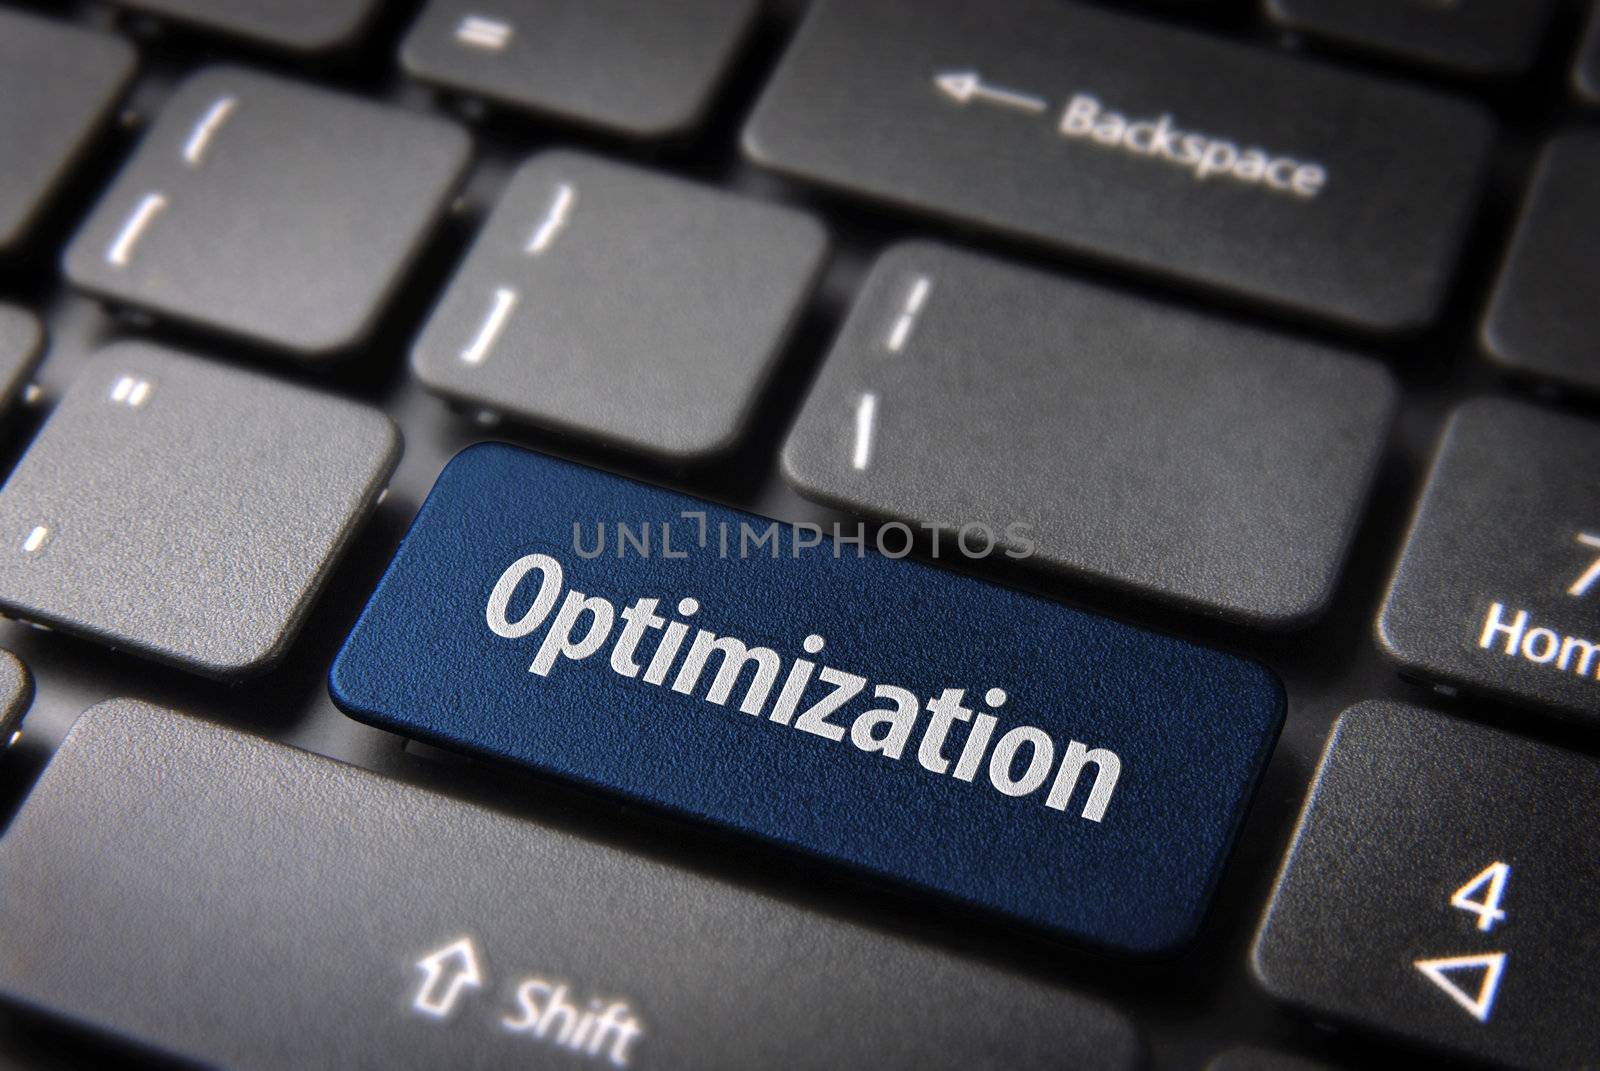 Blue Optimization keyboard key, business background by cienpies